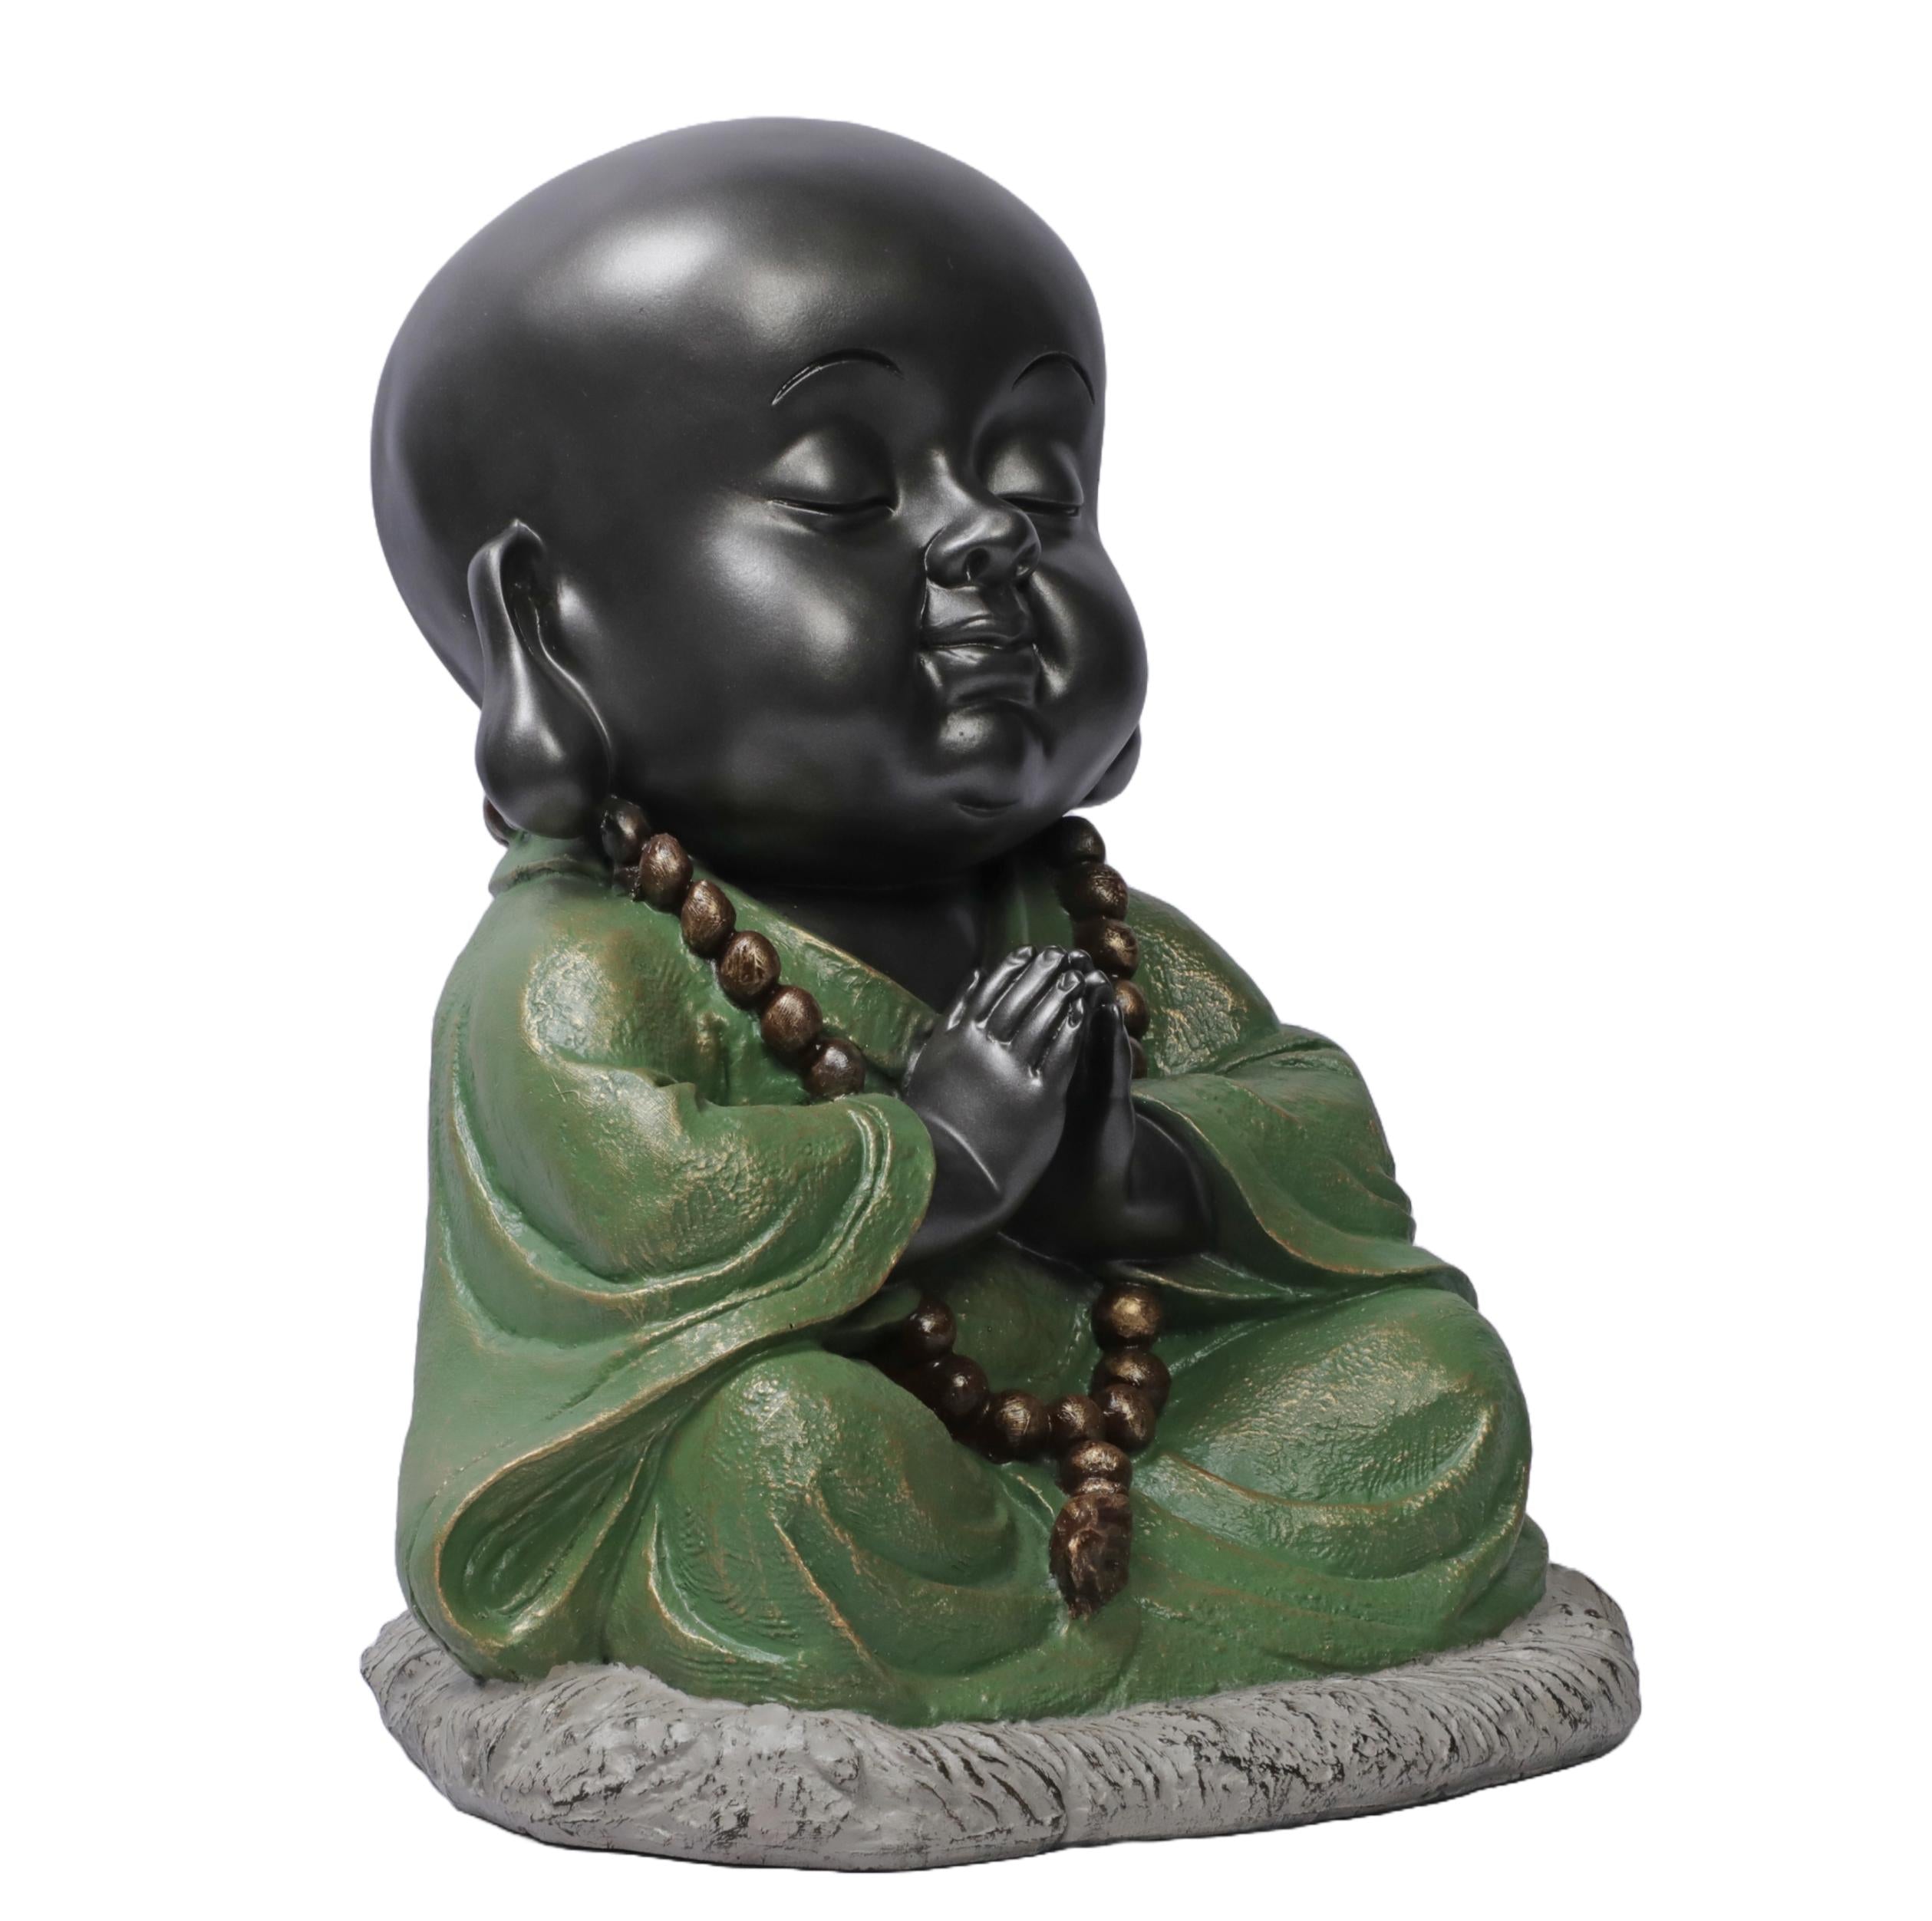 Ashnam Baby Monk Statue Engaged in Prayer - Black Green, 30 Cm